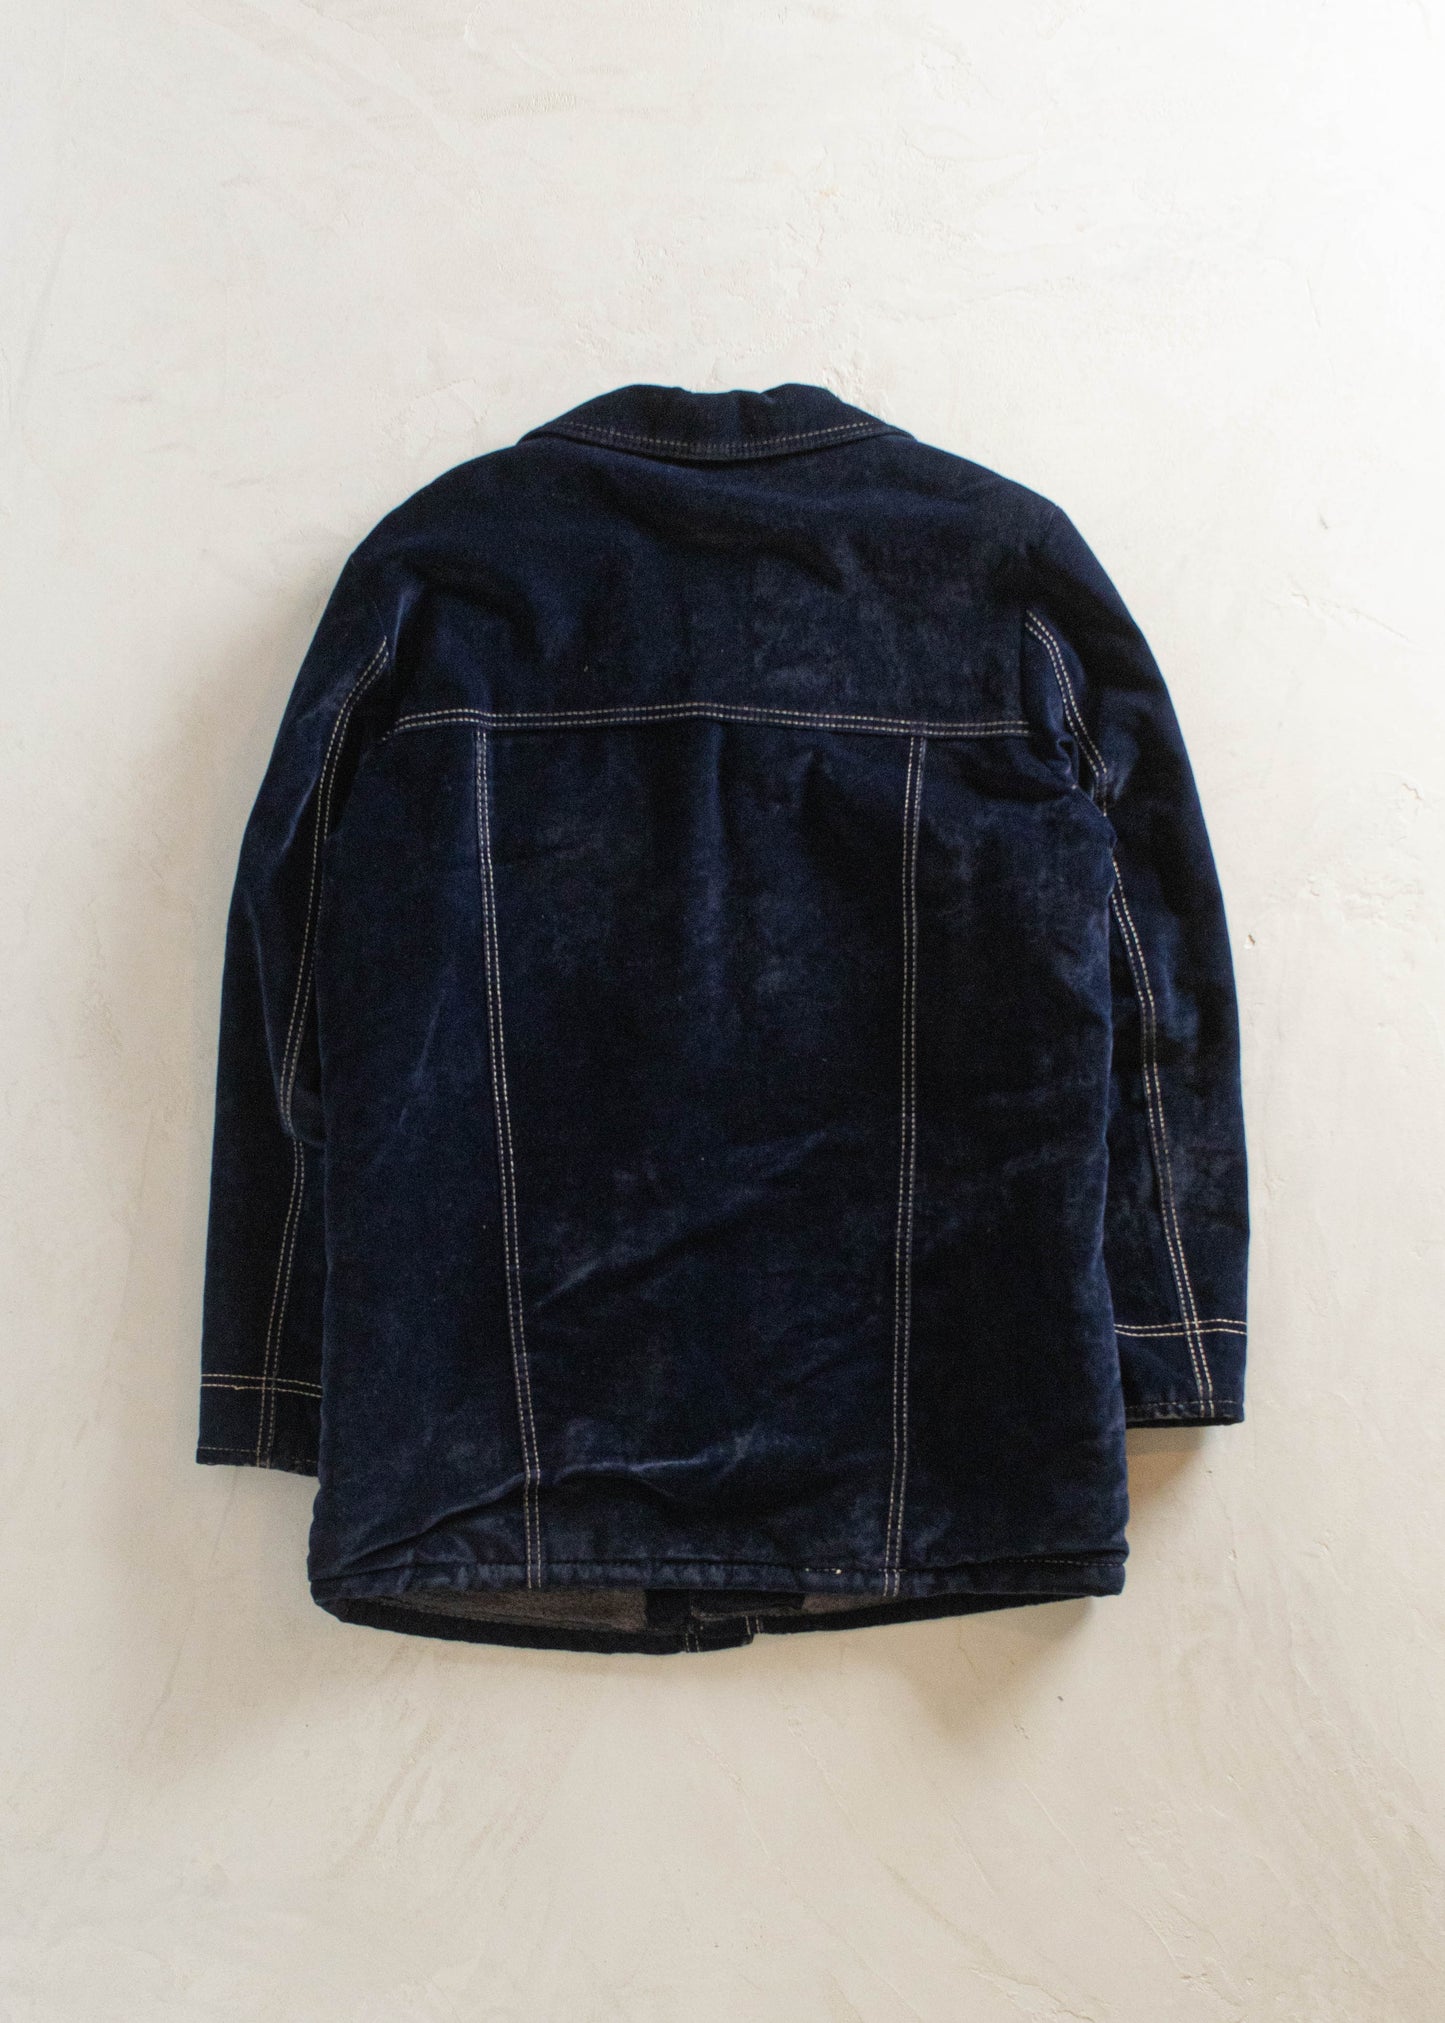 1970s JC Penney Velvet Jacket Size S/M